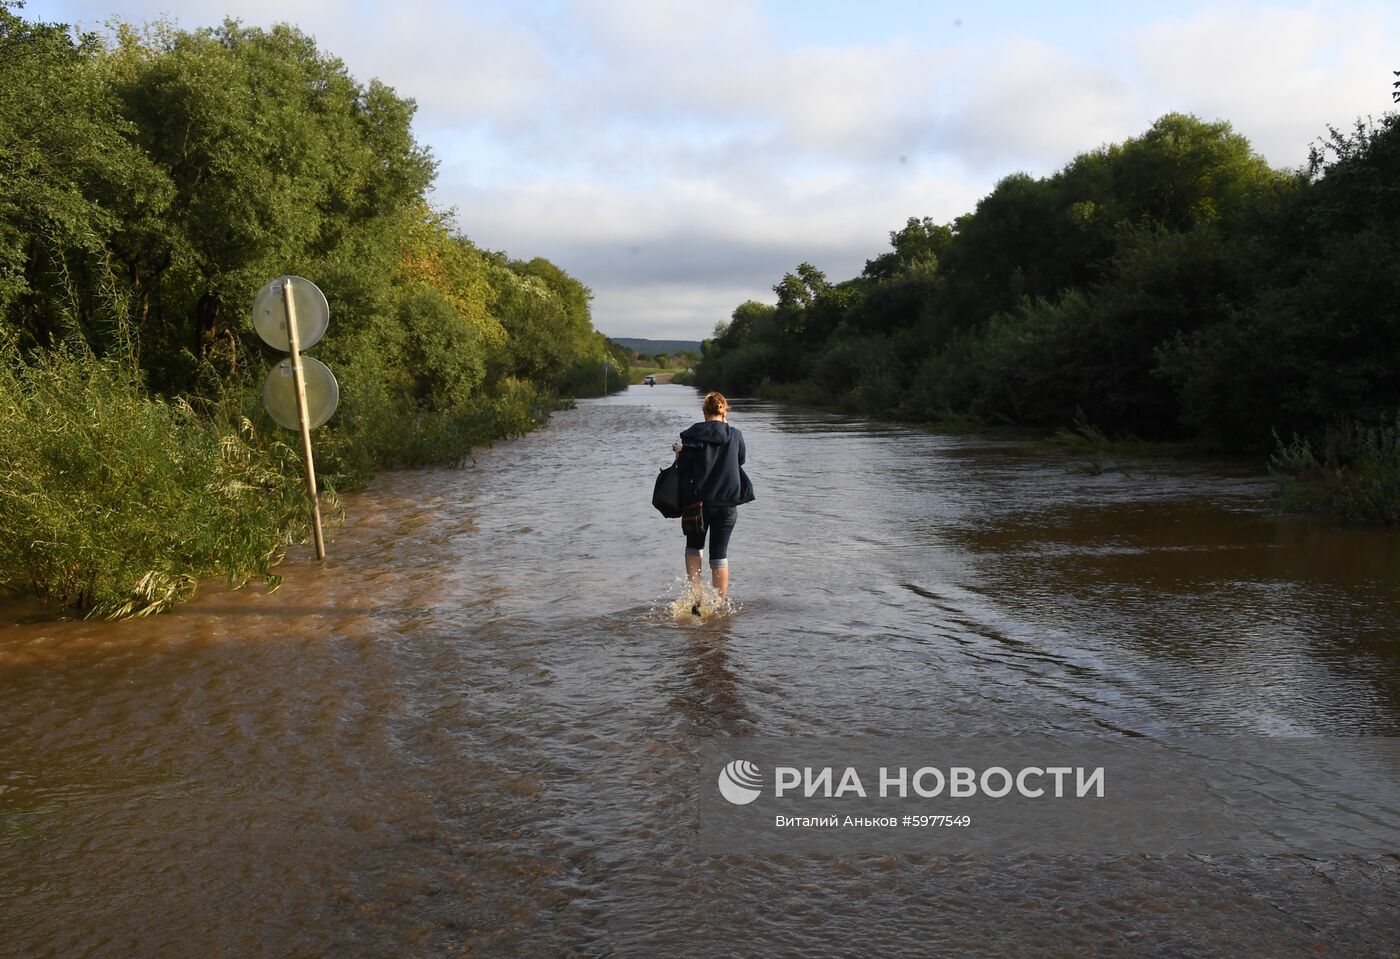 Последствия тайфуна "Кроса" в Приморском крае